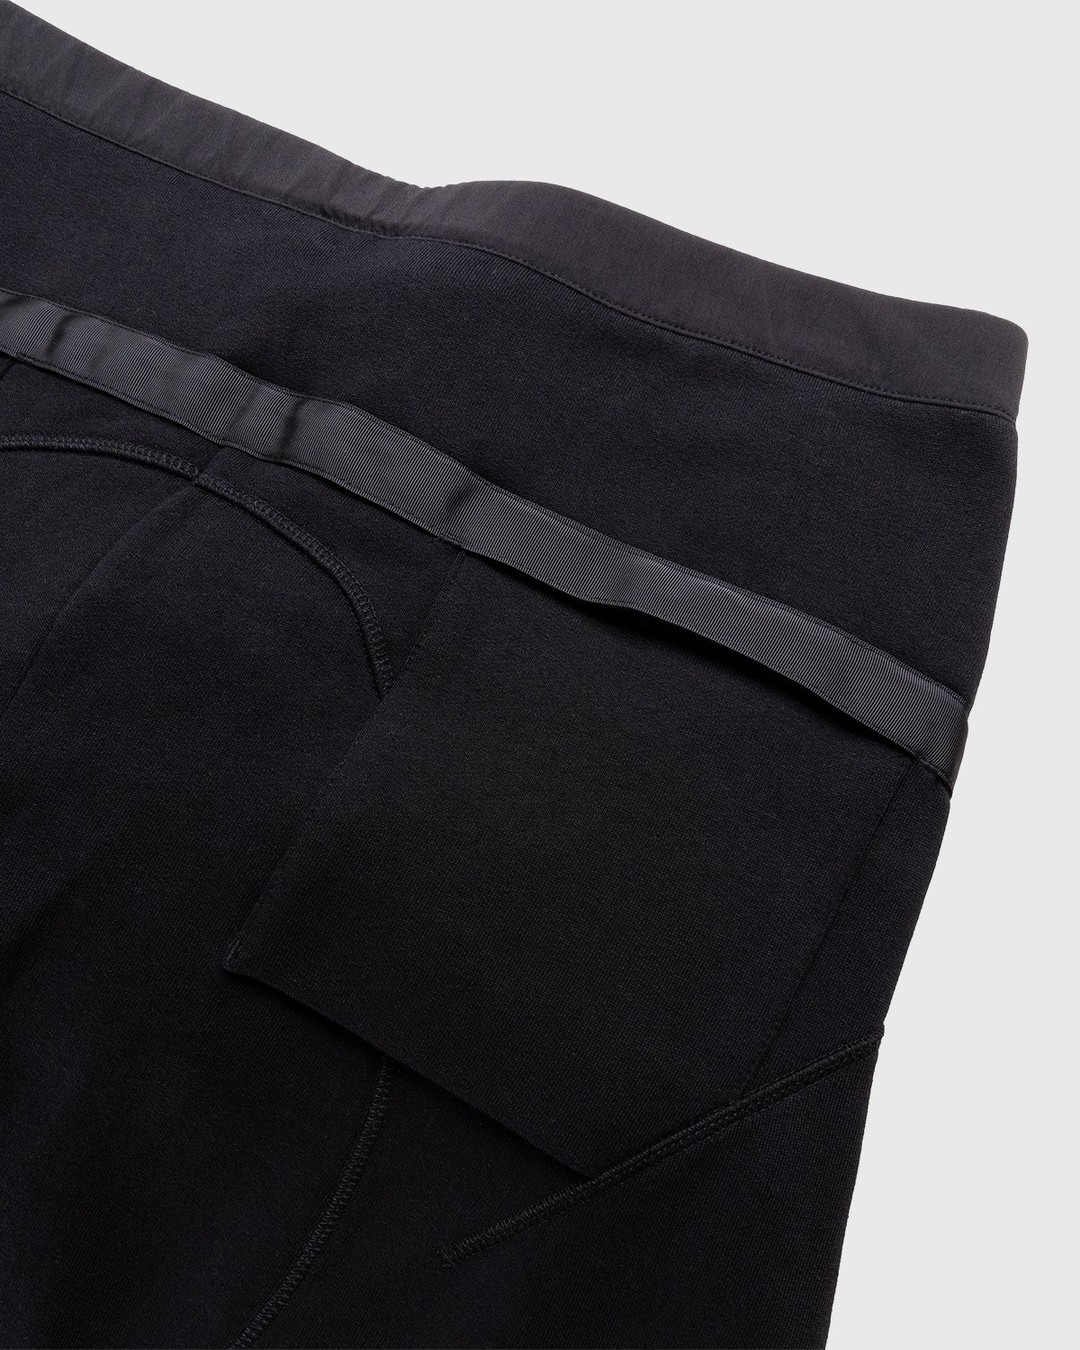 ACRONYM – P39-PR Pants Black - Pants - Black - Image 4